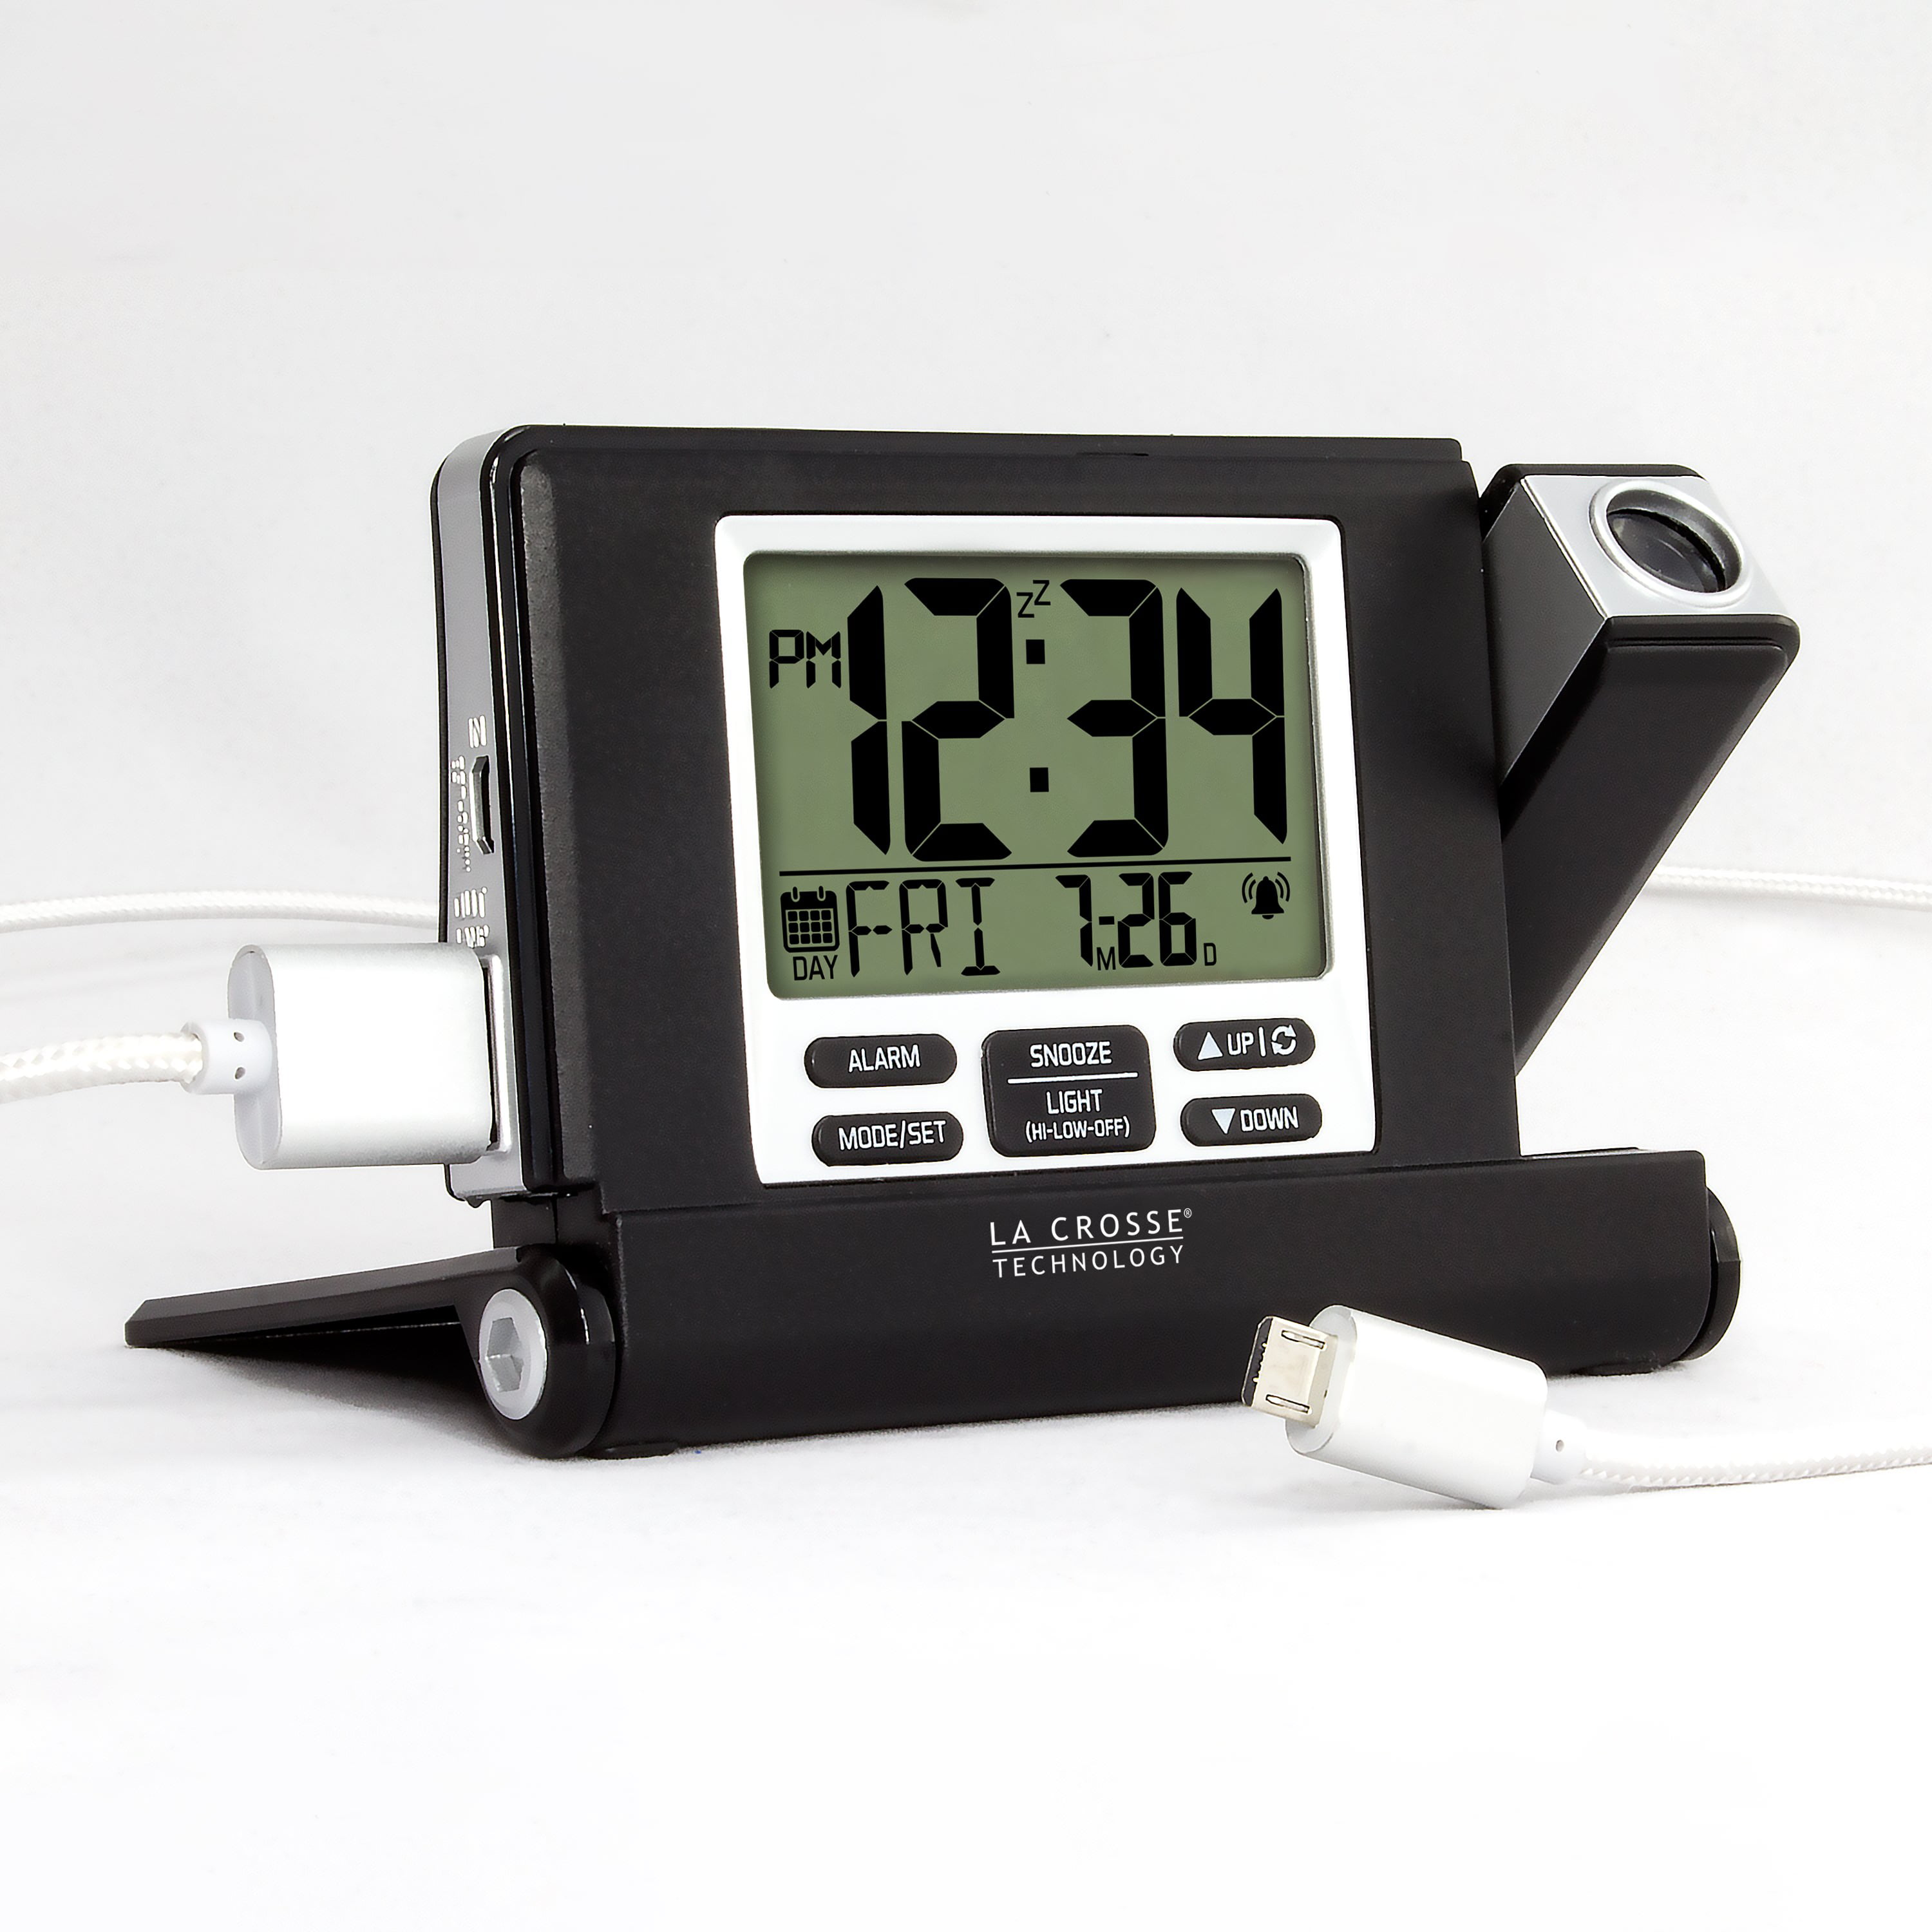 616A-1908 La Crosse Technology Travel Projection Alarm Clock USB Charging Port 